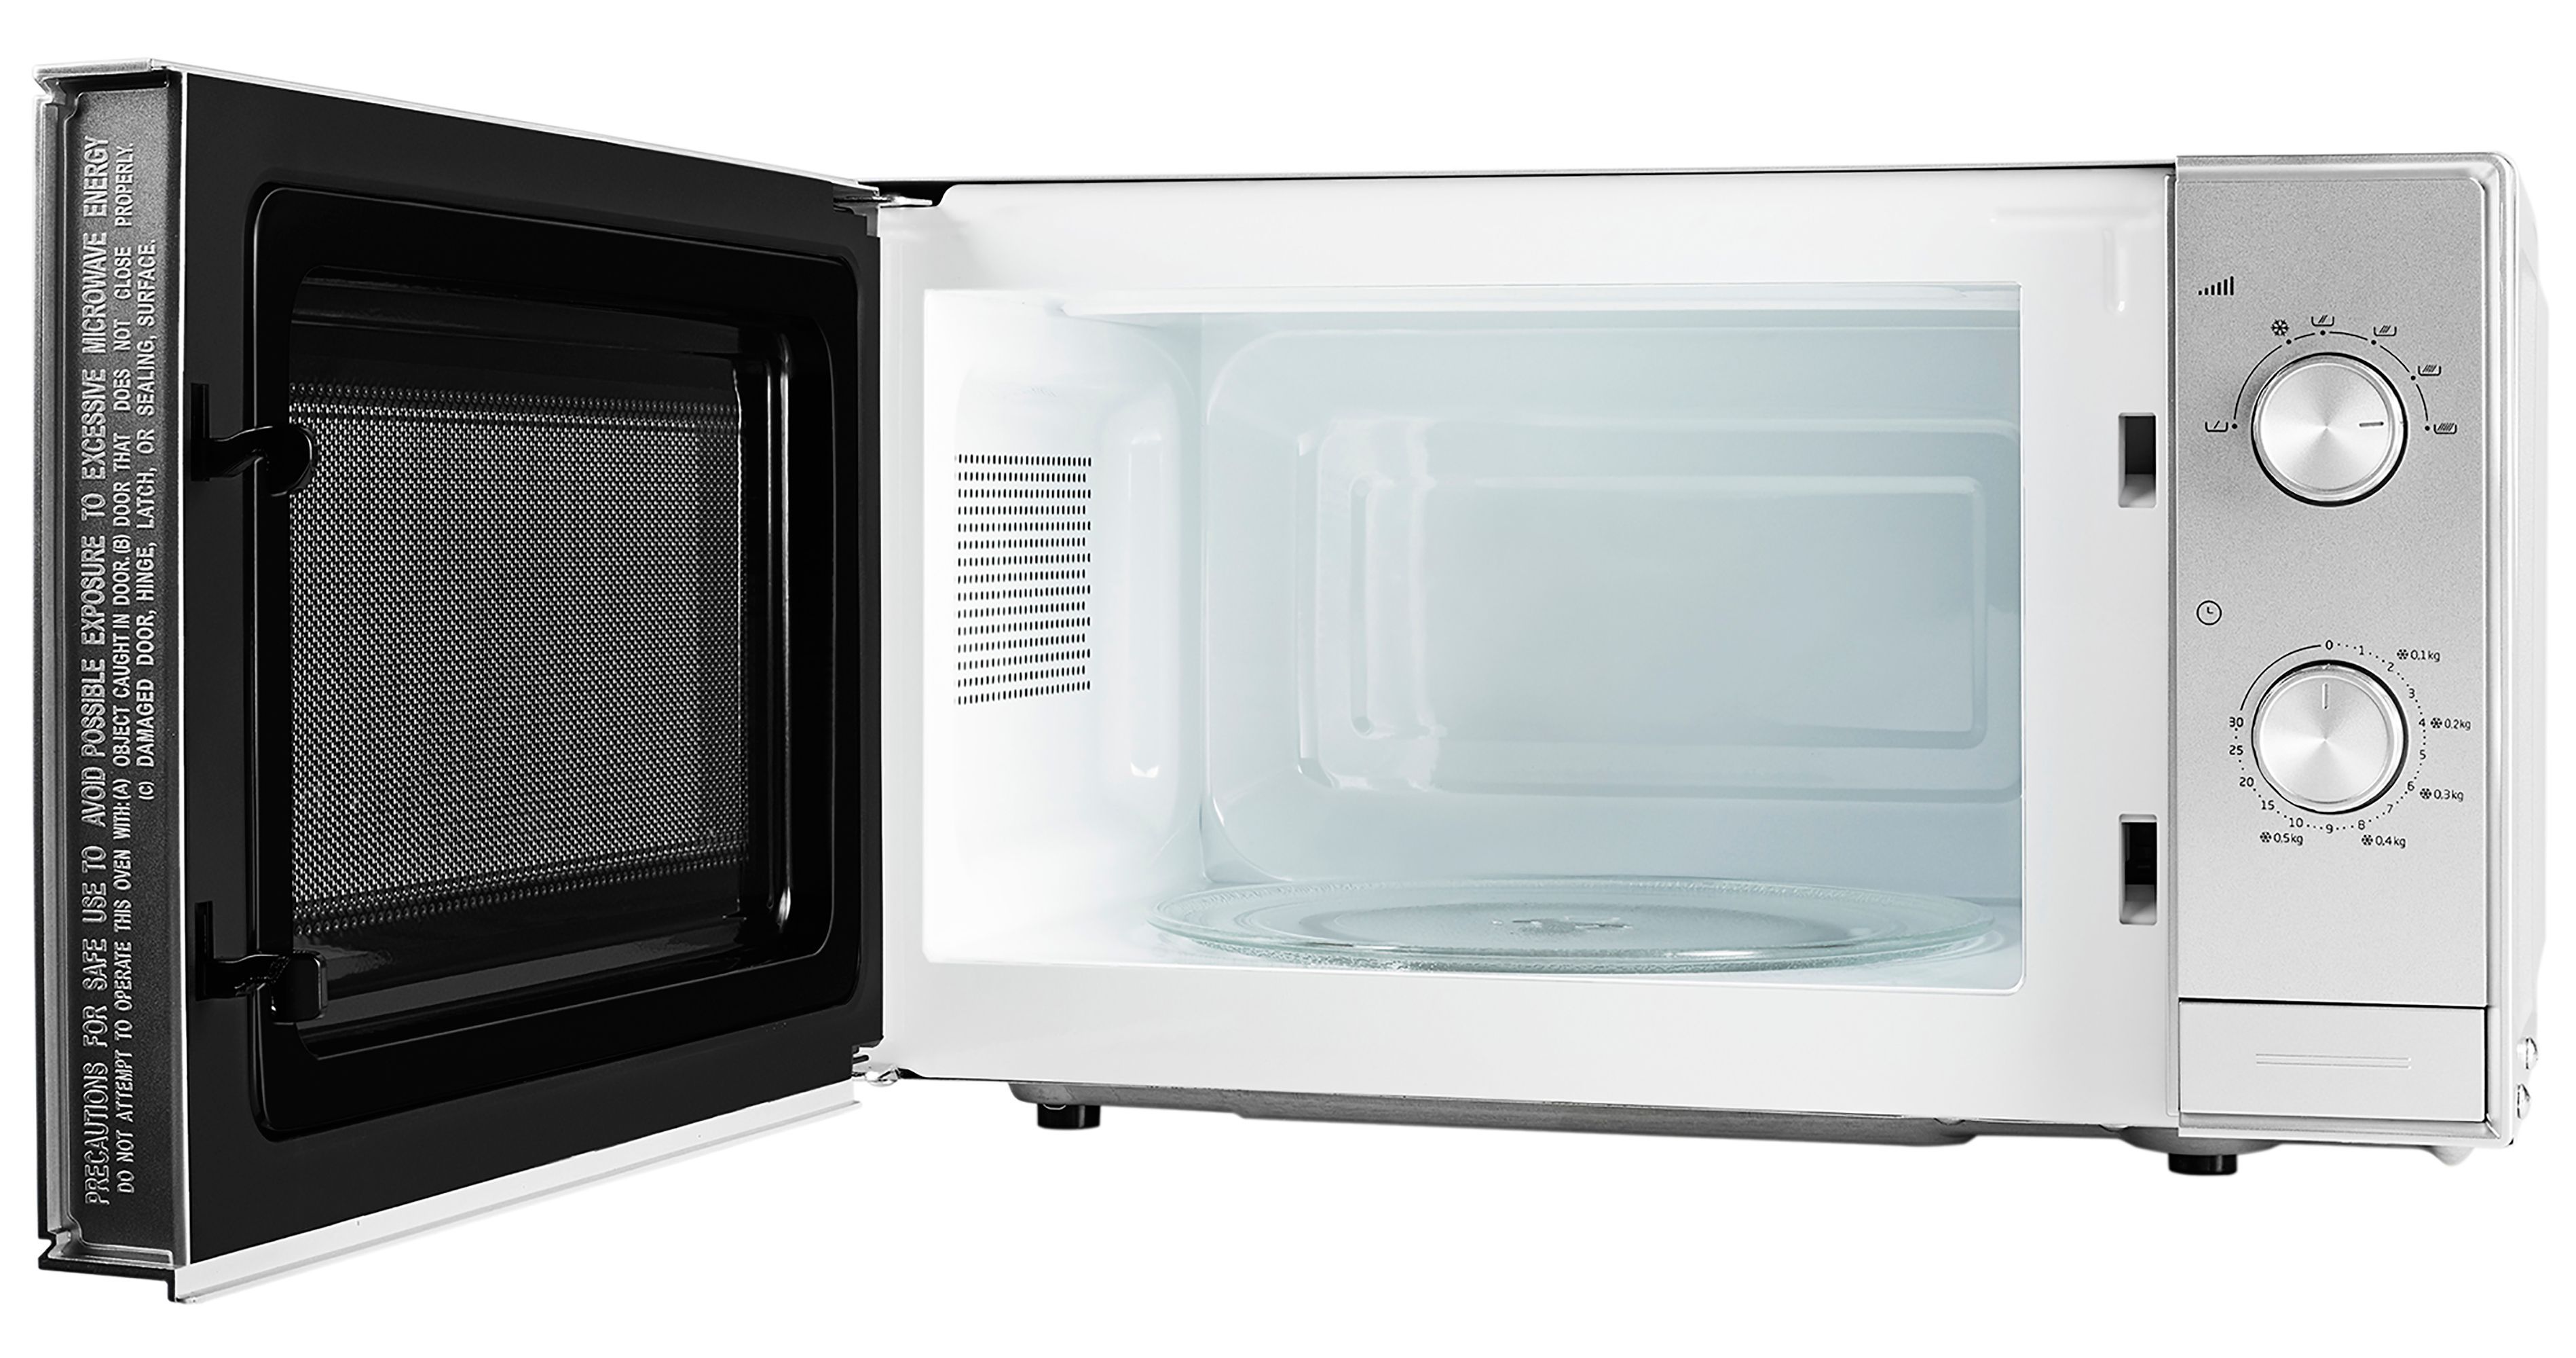 Beko MOC20100S 20L Freestanding Microwave